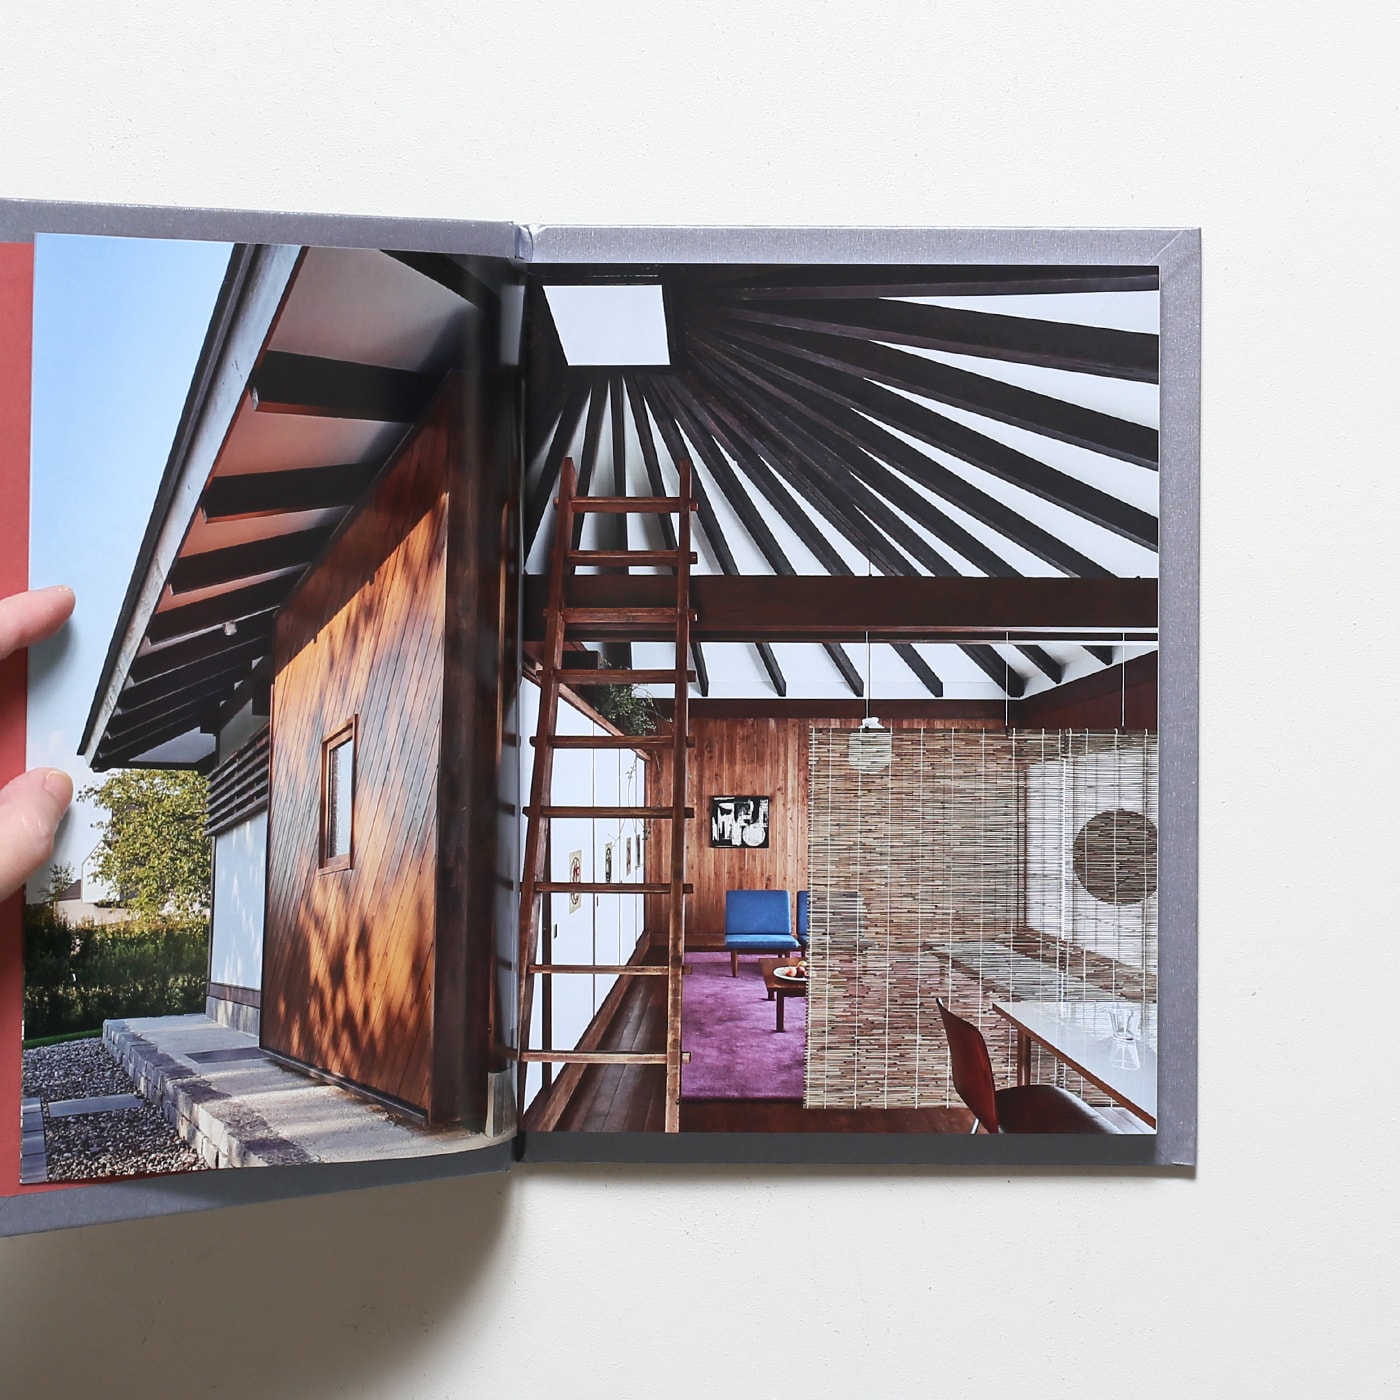 Kazuo Shinohara: The Umbrella House Project